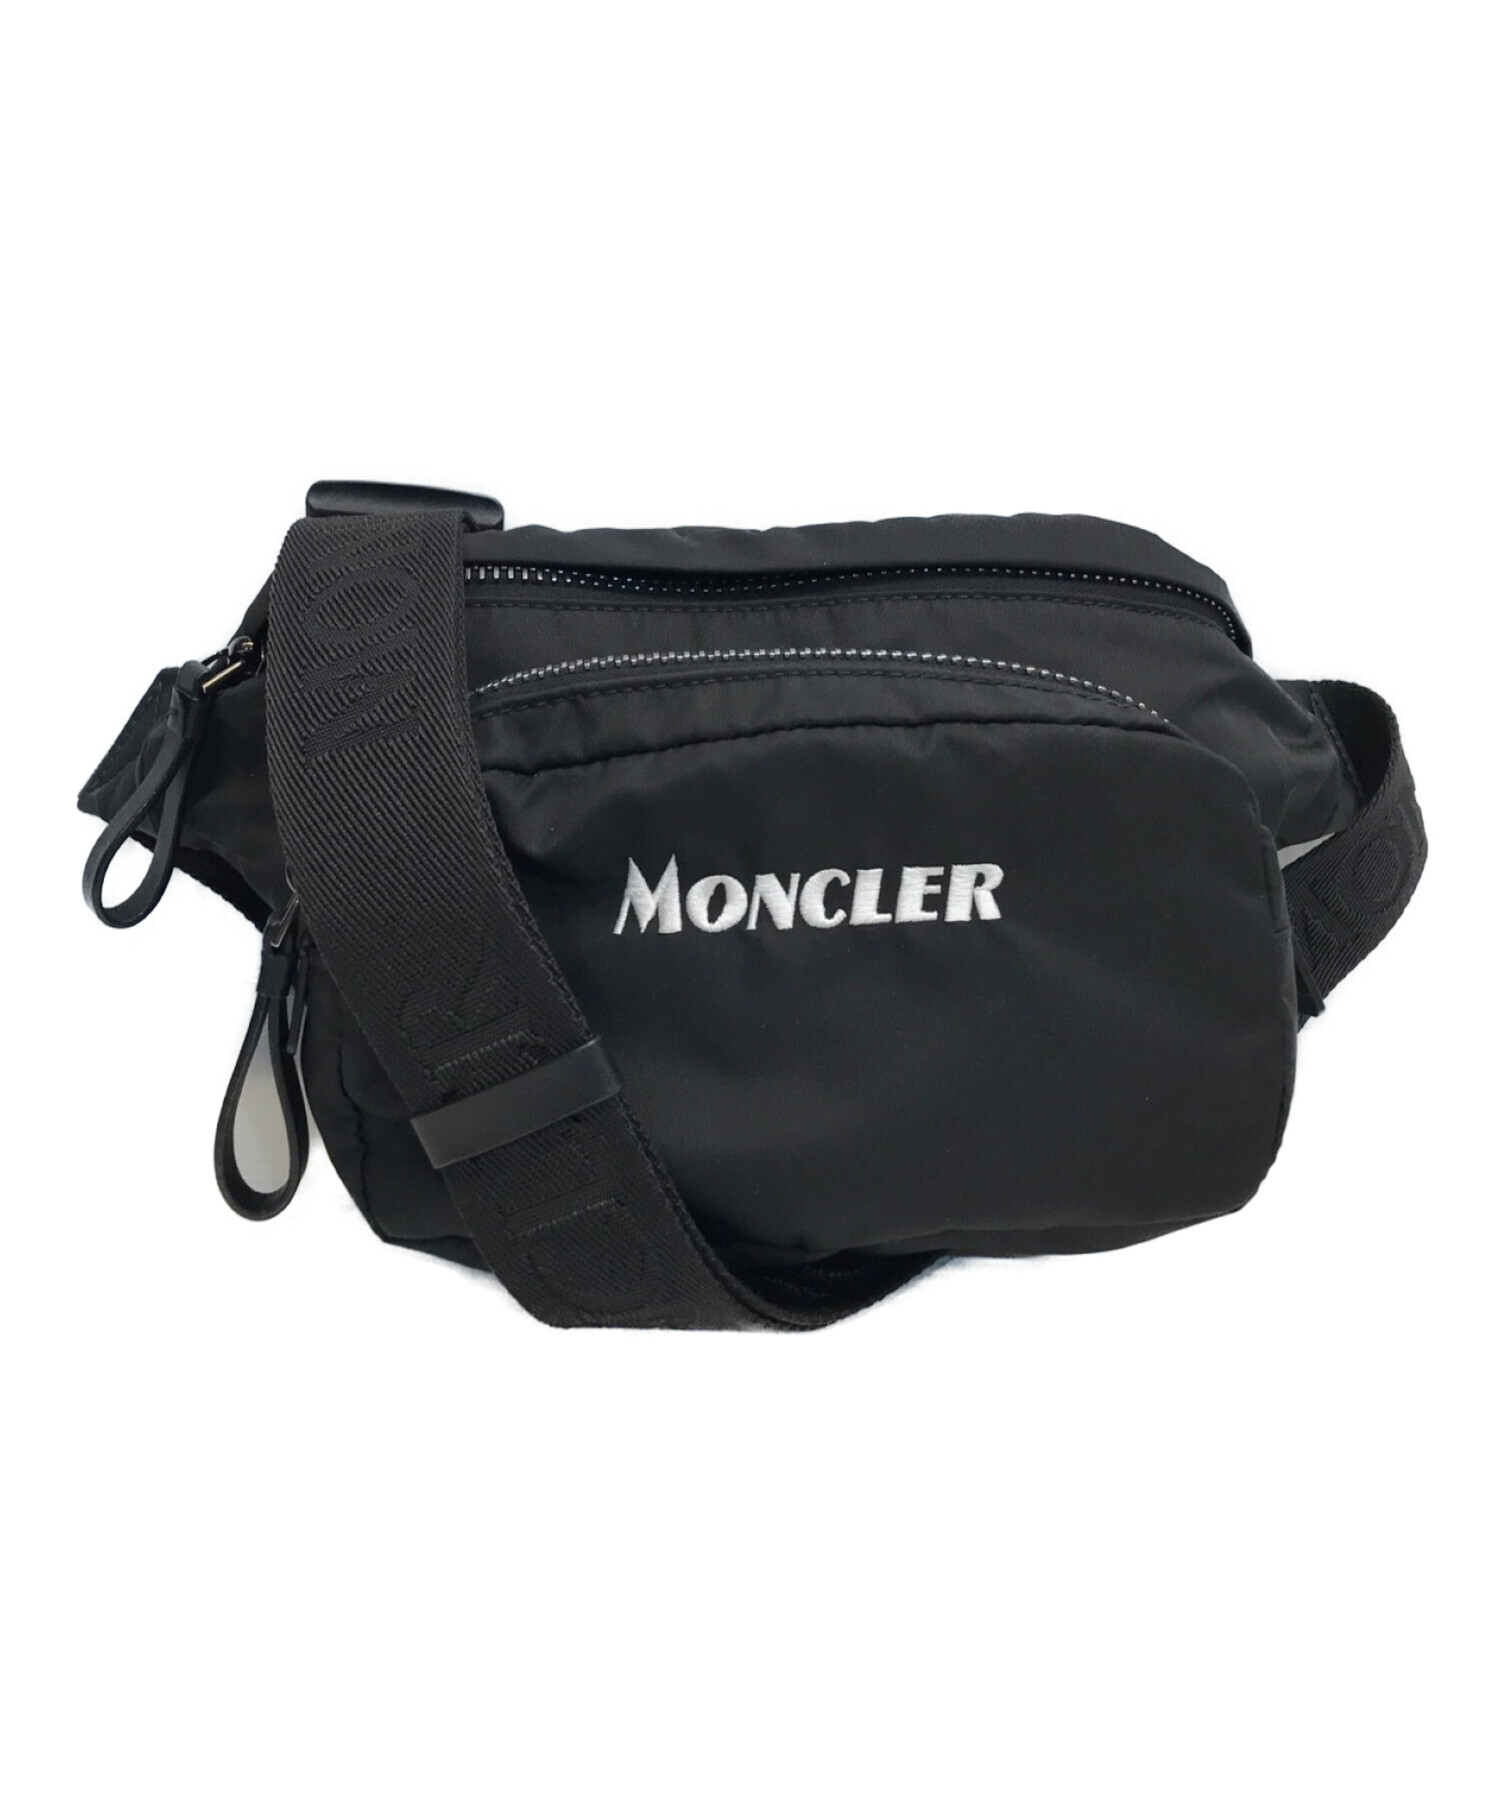 MONCLER (モンクレール) DURANCE BELT BAG　ロゴボディーバッグ ベルトバッグ ブラック